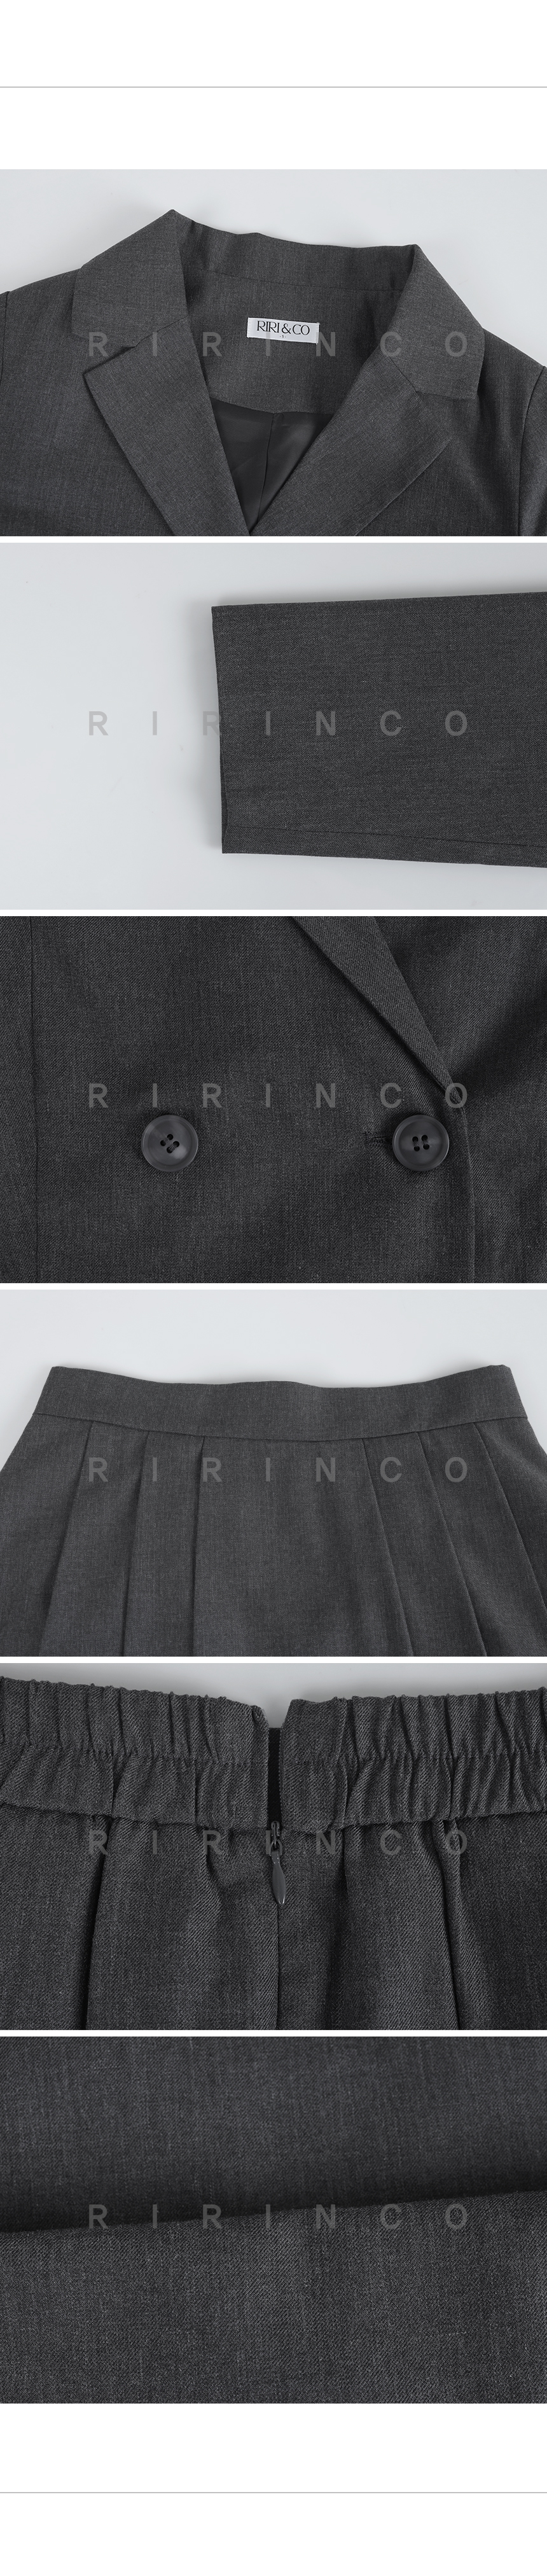 RIRINCO セミクロップド丈ジャケット&プリーツミニスカート上下セット